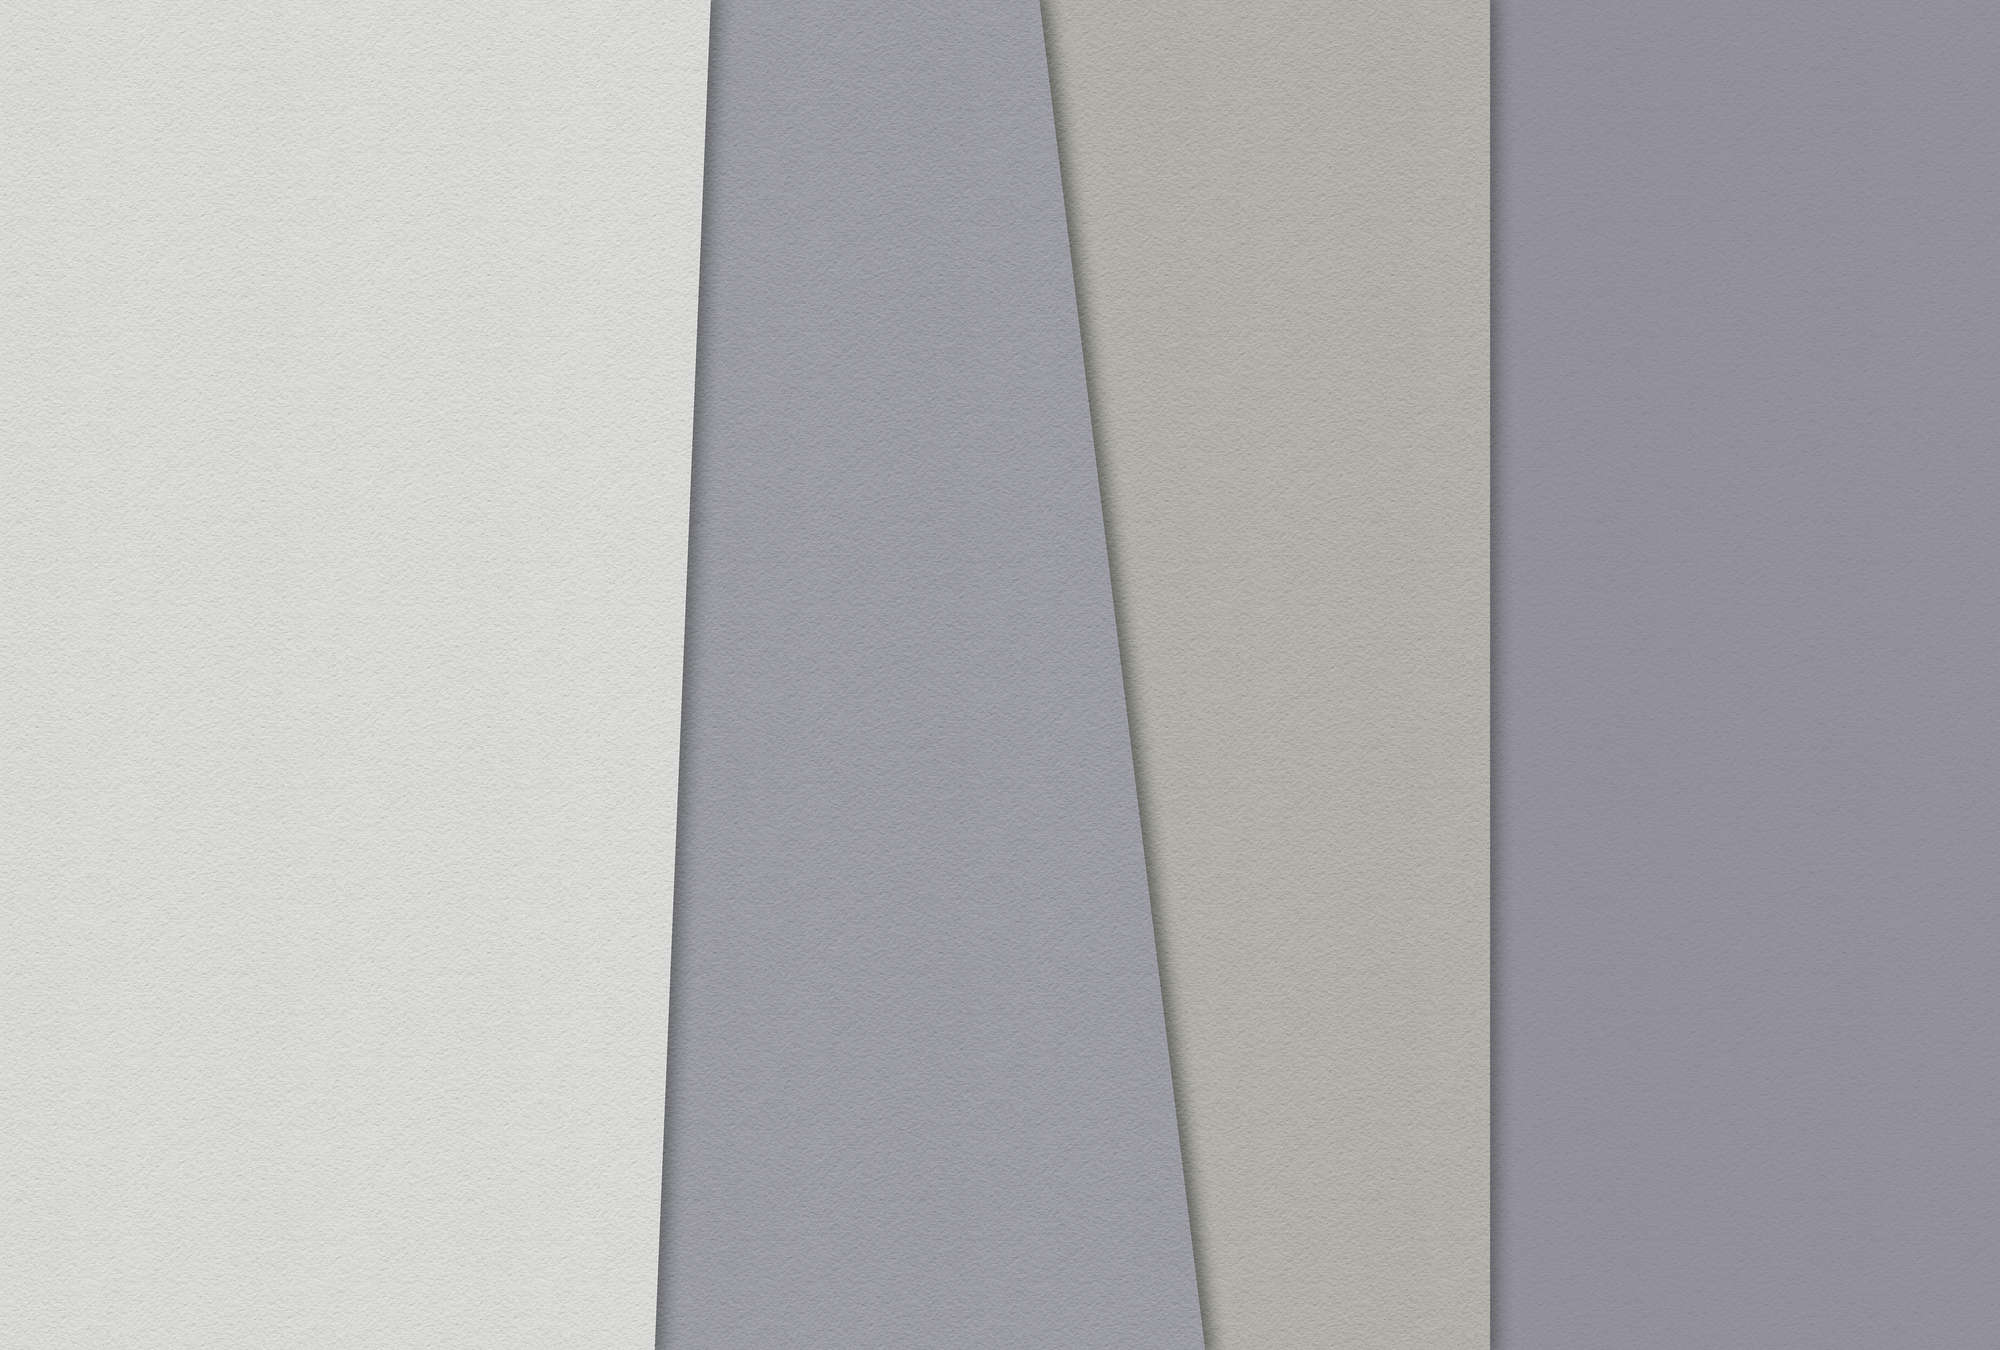             Layered paper 2 - Grafik Fototapete, Büttenpapier Struktur minimalistisches Design – Creme, Grün | Mattes Glattvlies
        